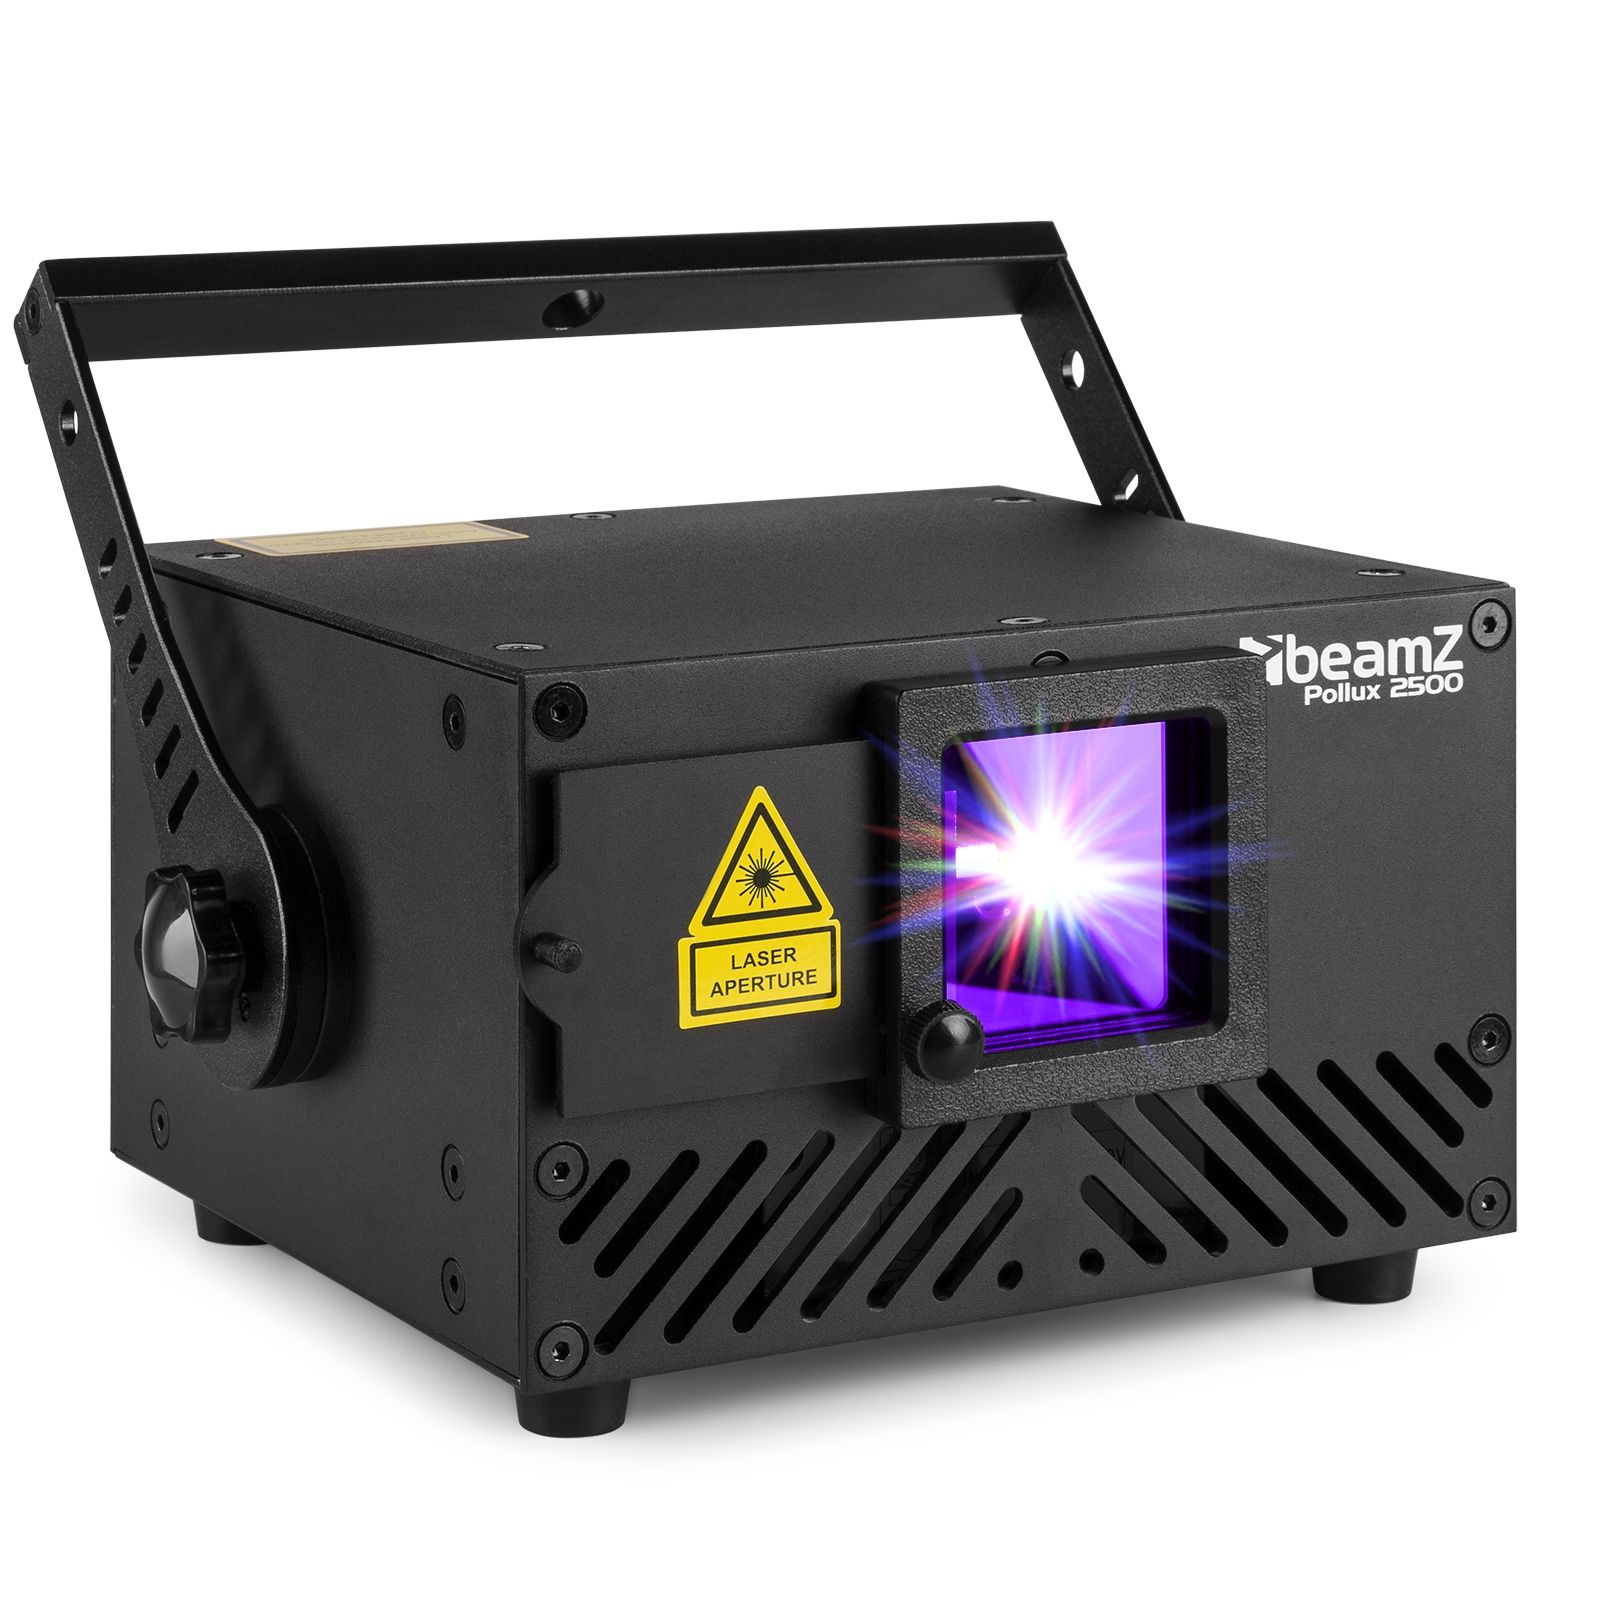 Retourdeal - BeamZ 2500 Pollux laser RGB - Multicolor 2500mW analoge